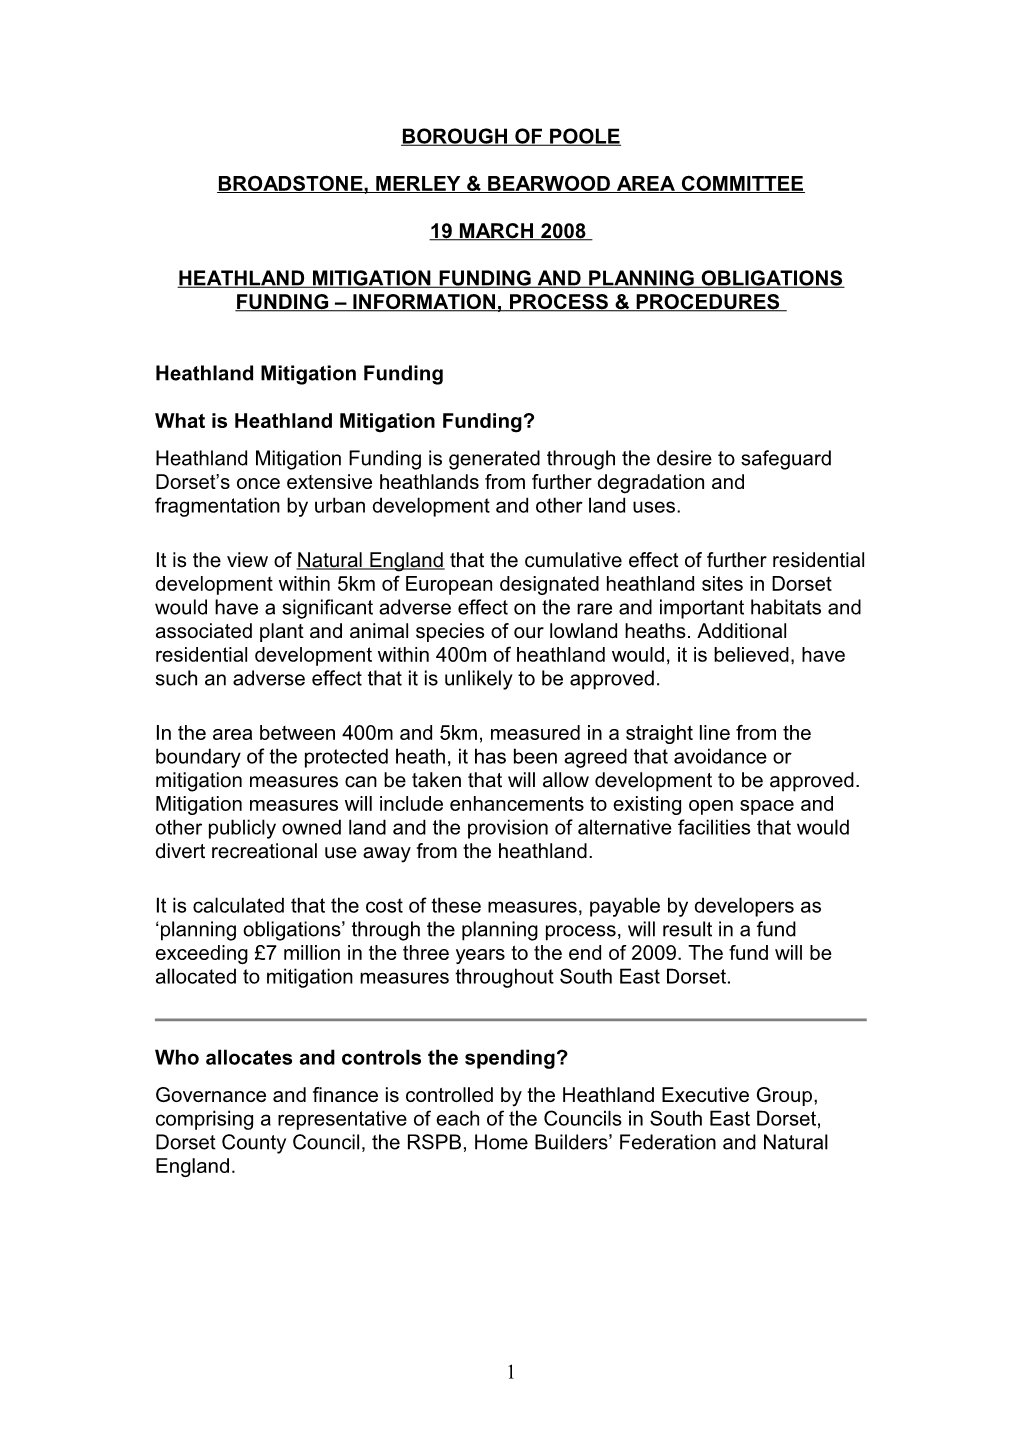 Heathland Mitigation Funding and Planning Obligations Funding Information, Process & Procedures